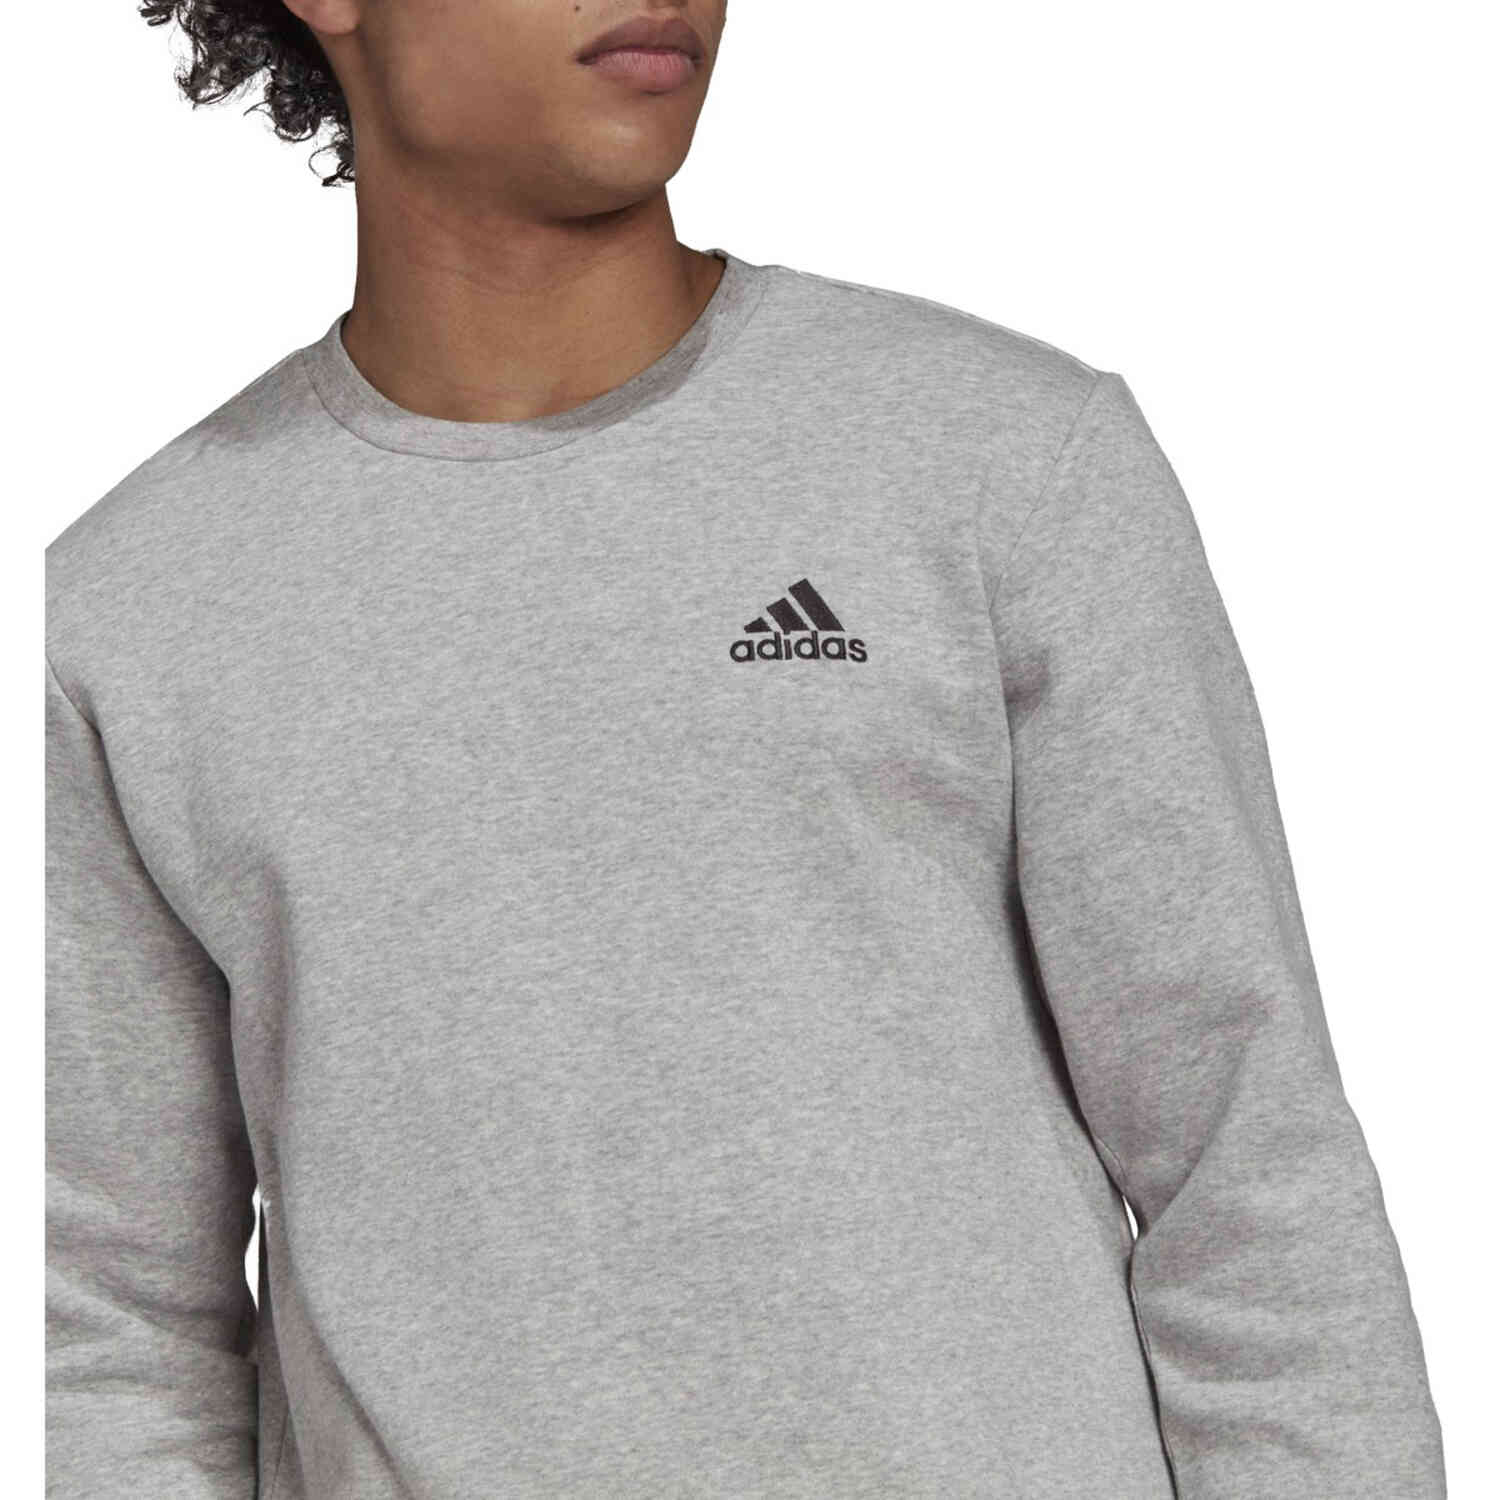 Essentials Heather/Black - Medium - Grey adidas Sweatshirt Cozy SoccerPro